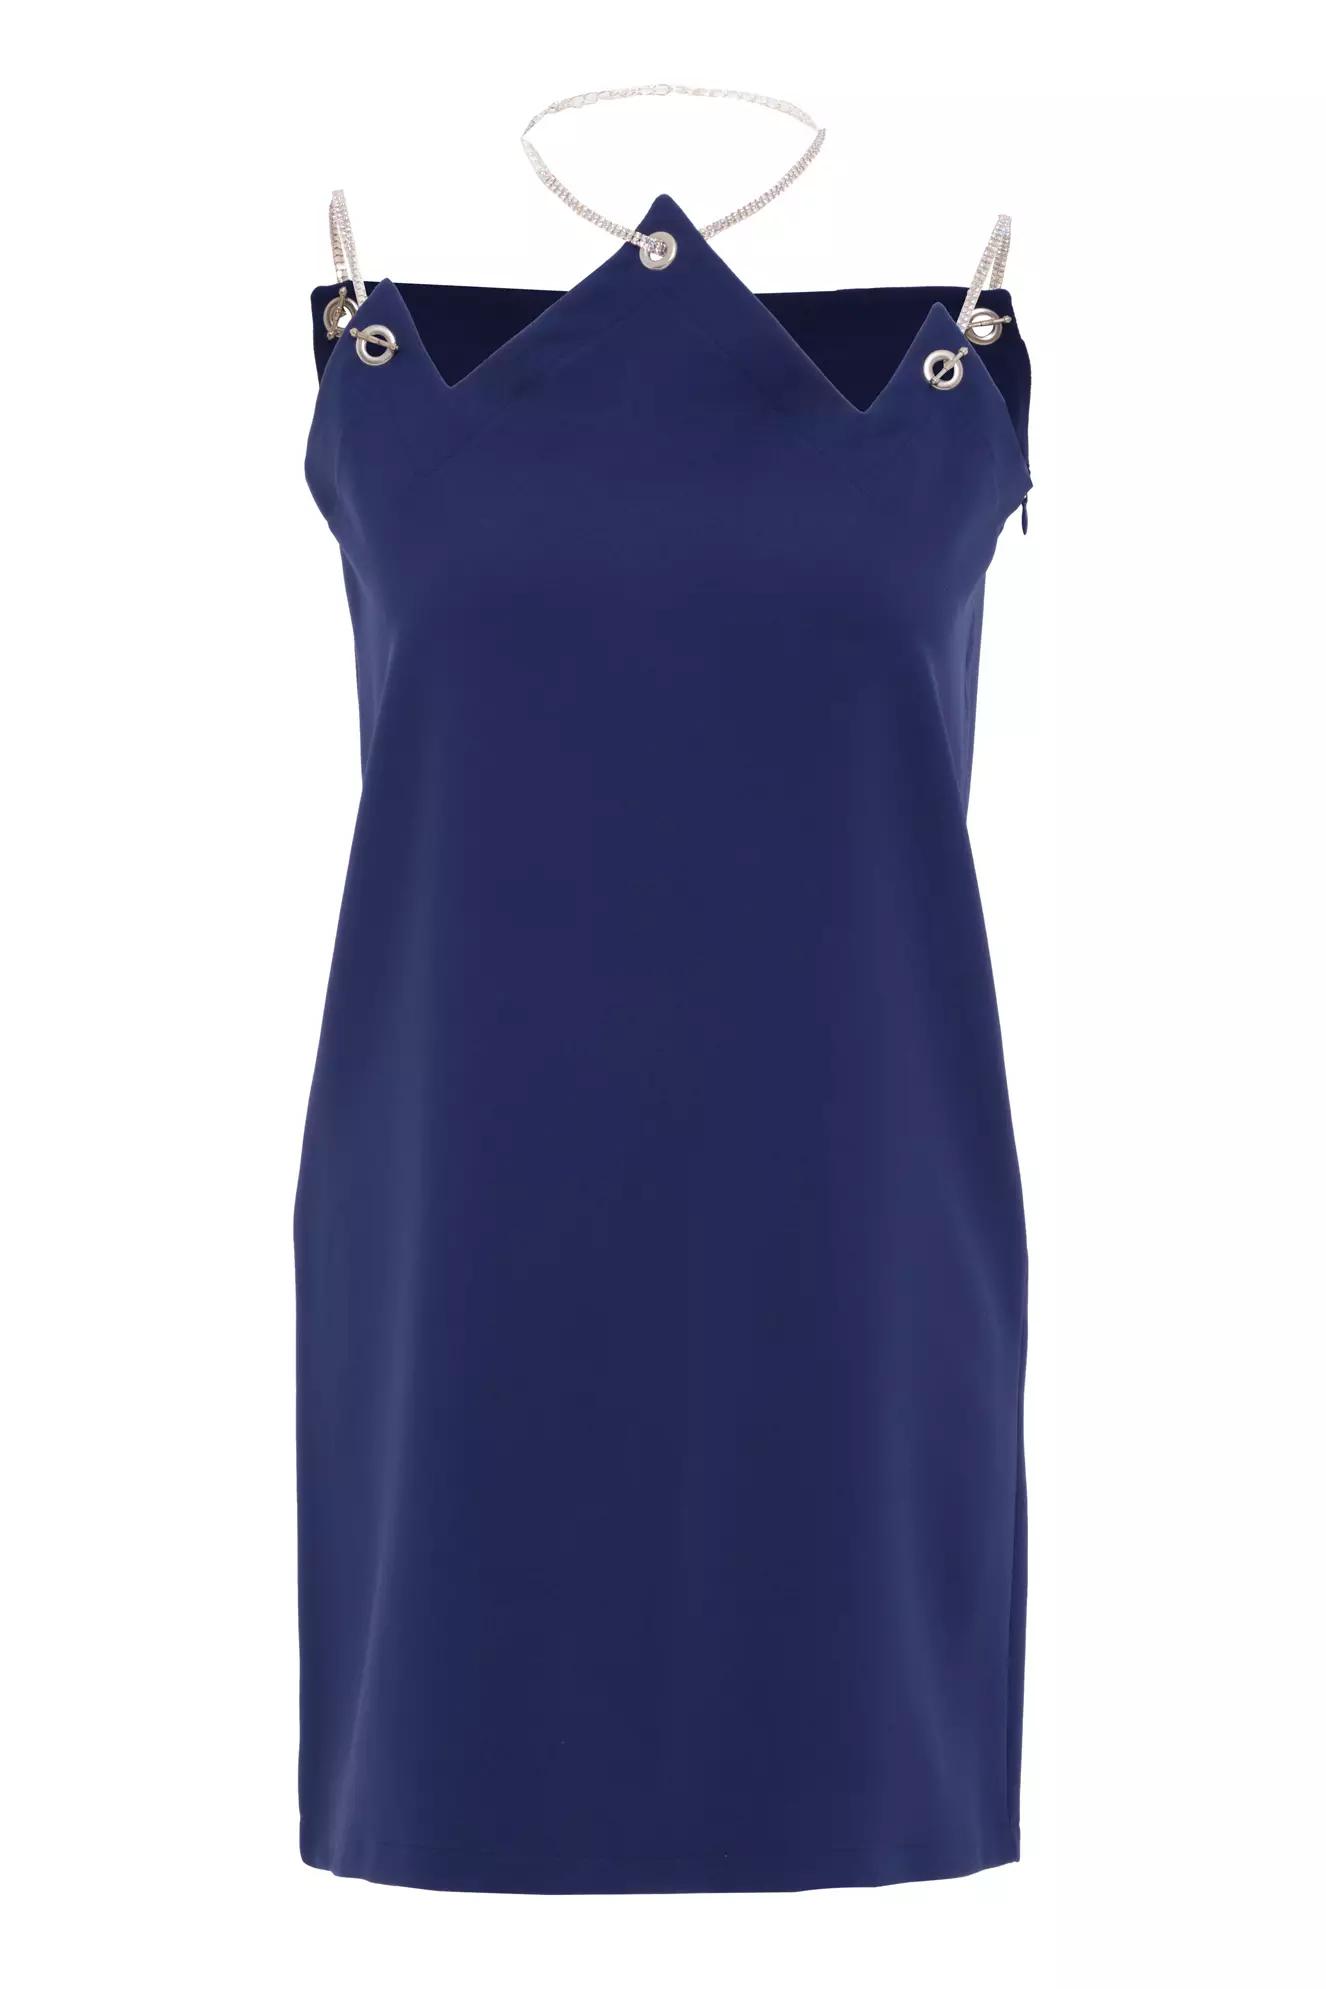 Navy blue crepe sleeveless mini dress